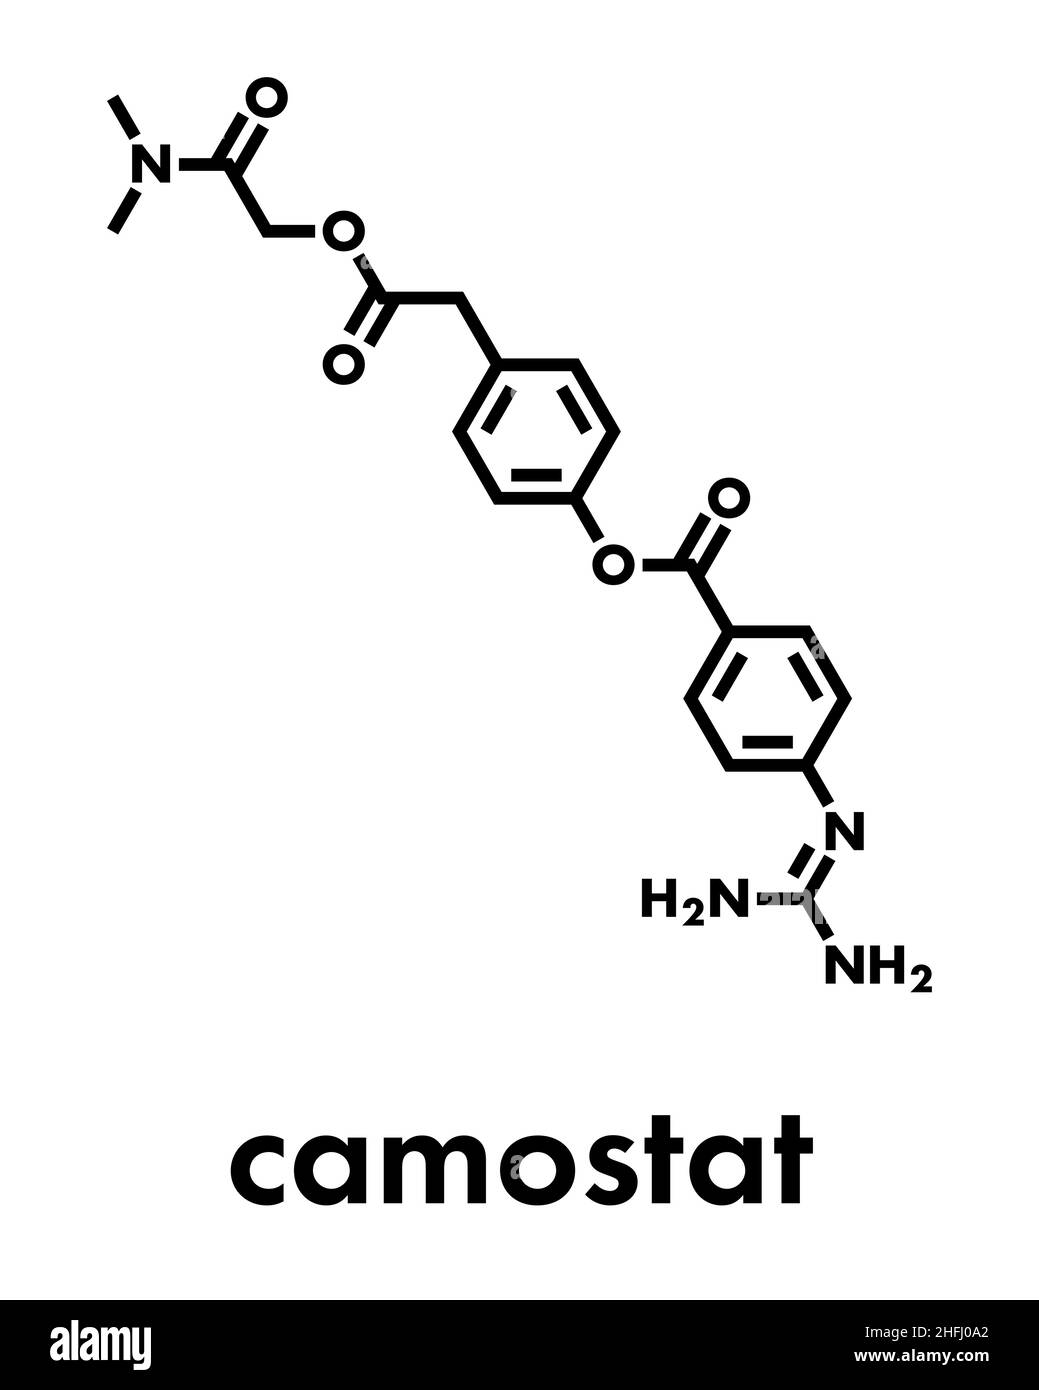 Camostat drug molecule. Serine protease inhibitor, investigated for treatment of Covid-19. Skeletal formula. Stock Vector